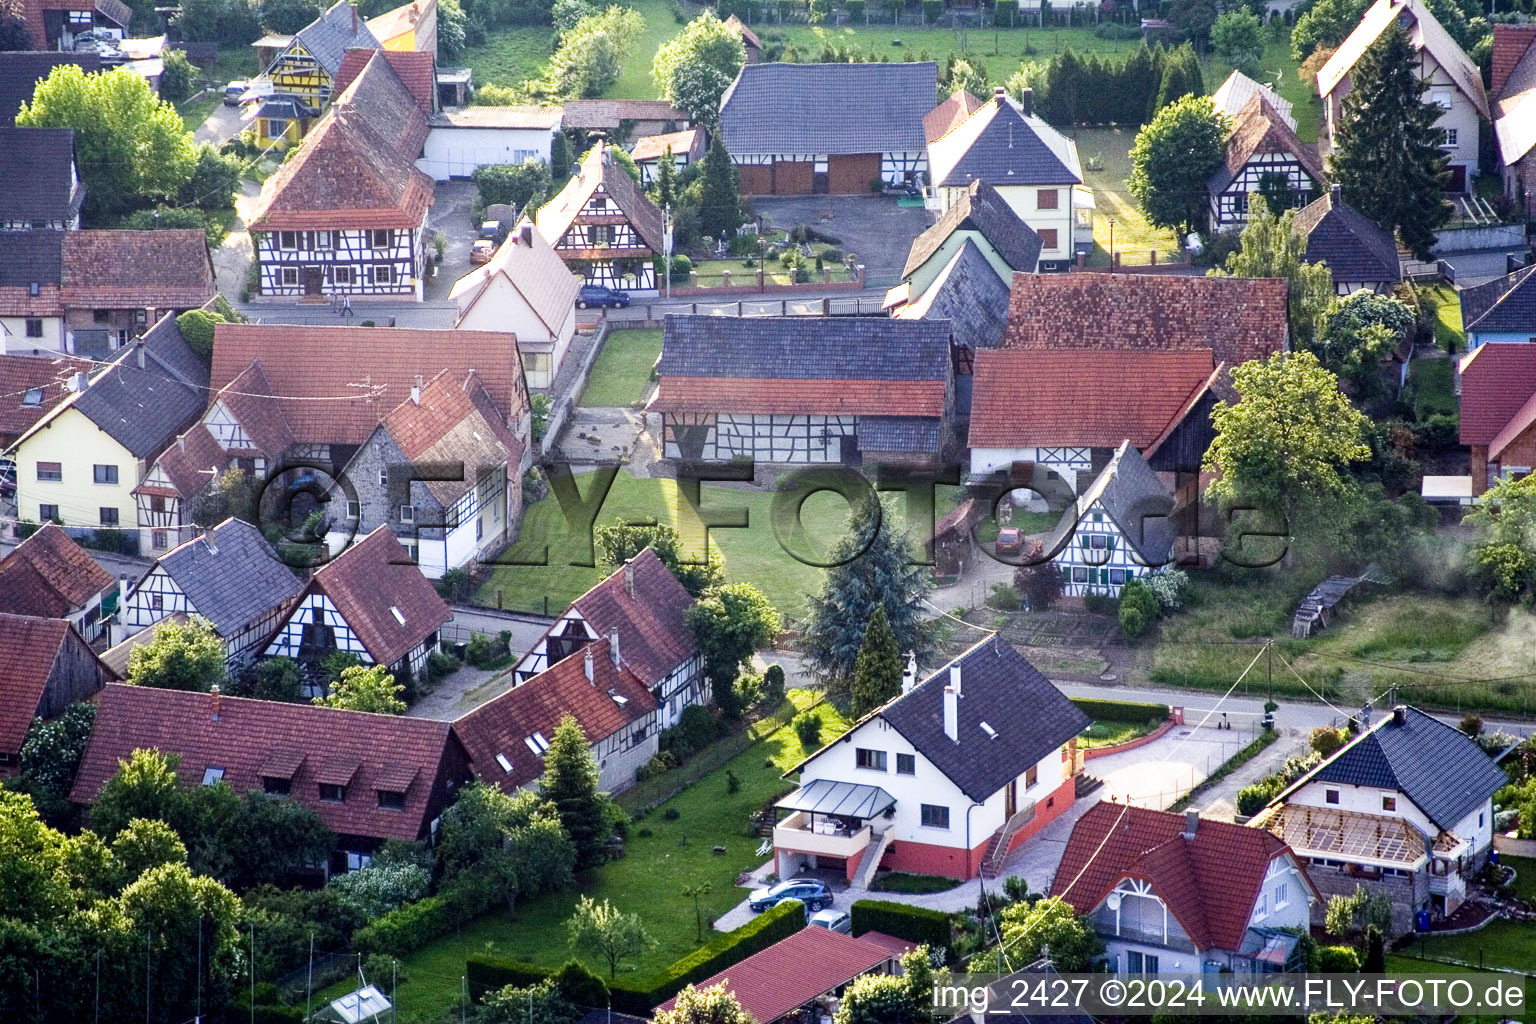 Village view in Forstfeld in Grand Est, France